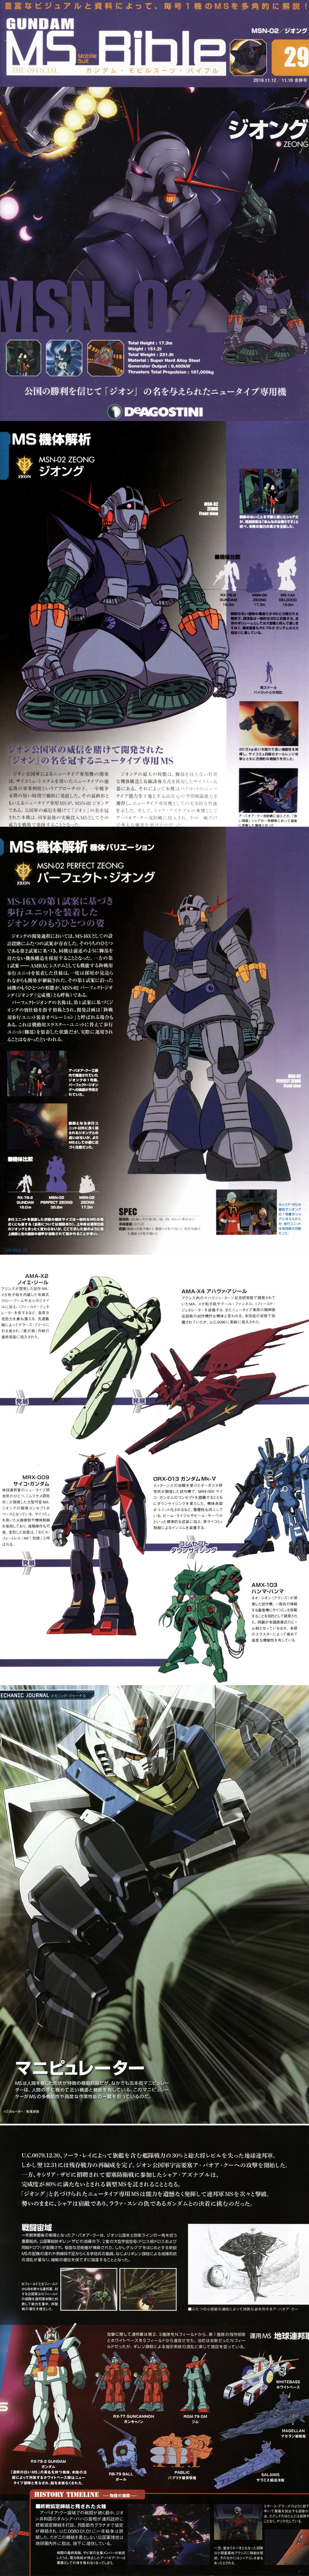 Gundam Mobile Suit Bible V29 30 高达原画cg游戏动漫资料 淘宝网